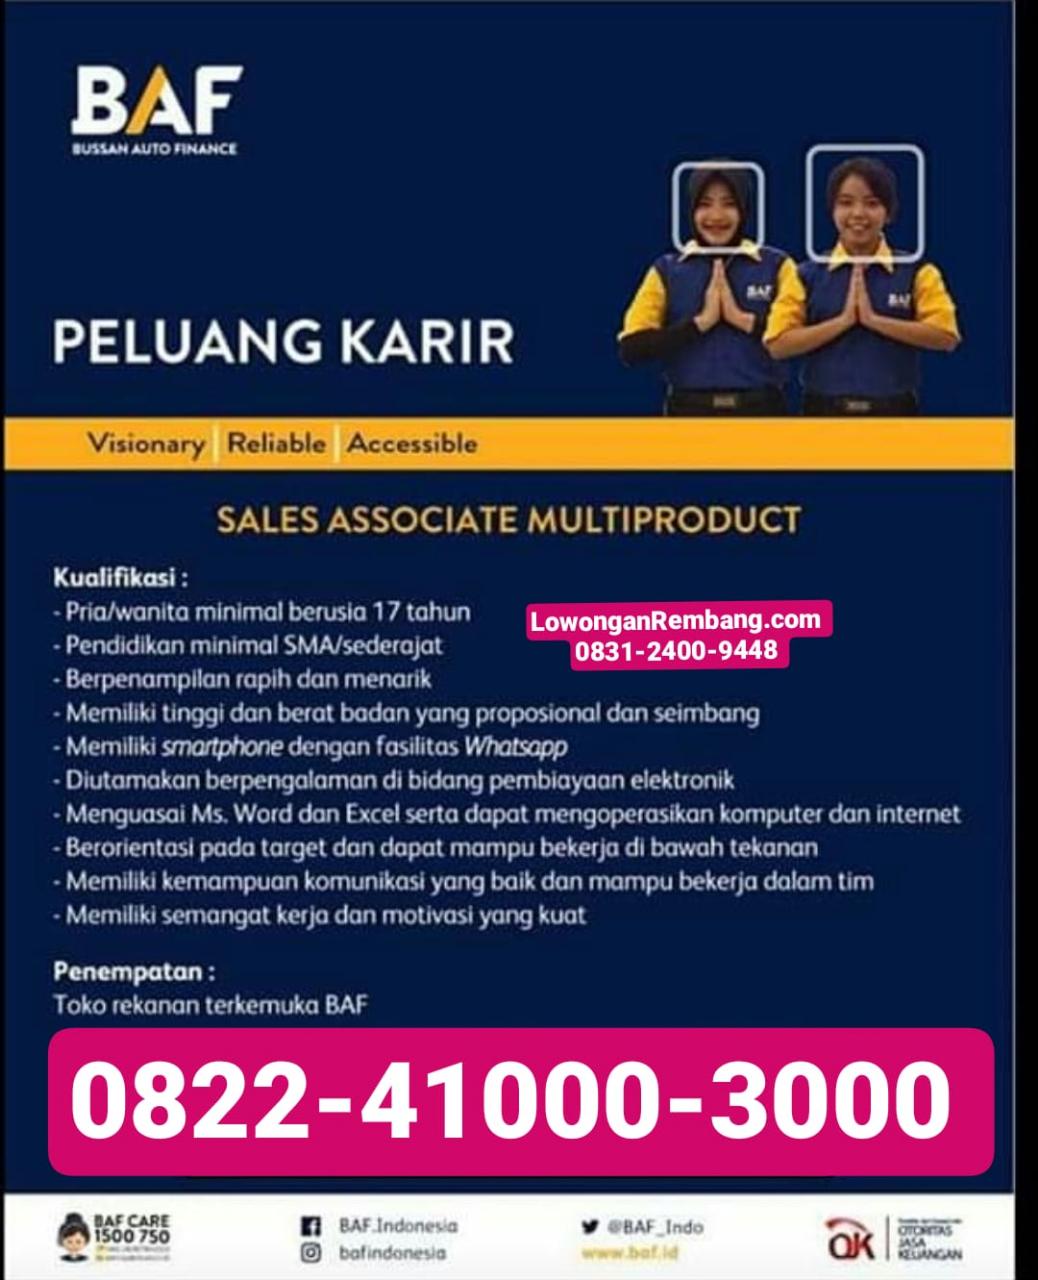 Lowongan Kerja Sales Associate Multiproduct BAF Finance Rembang